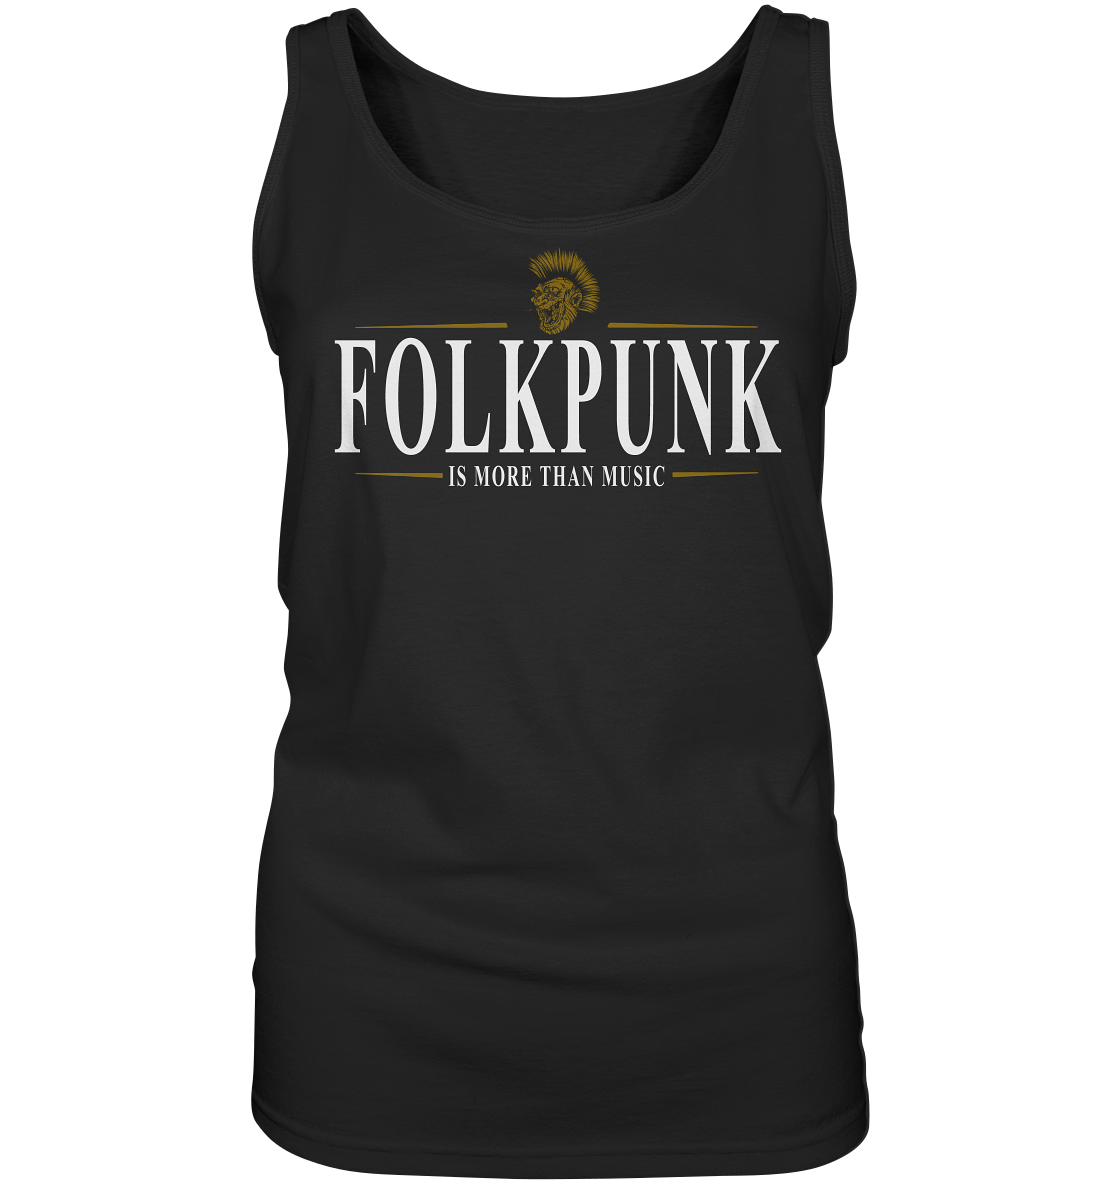 Folkpunk "Is More Than Music" - Ladies Tank-Top